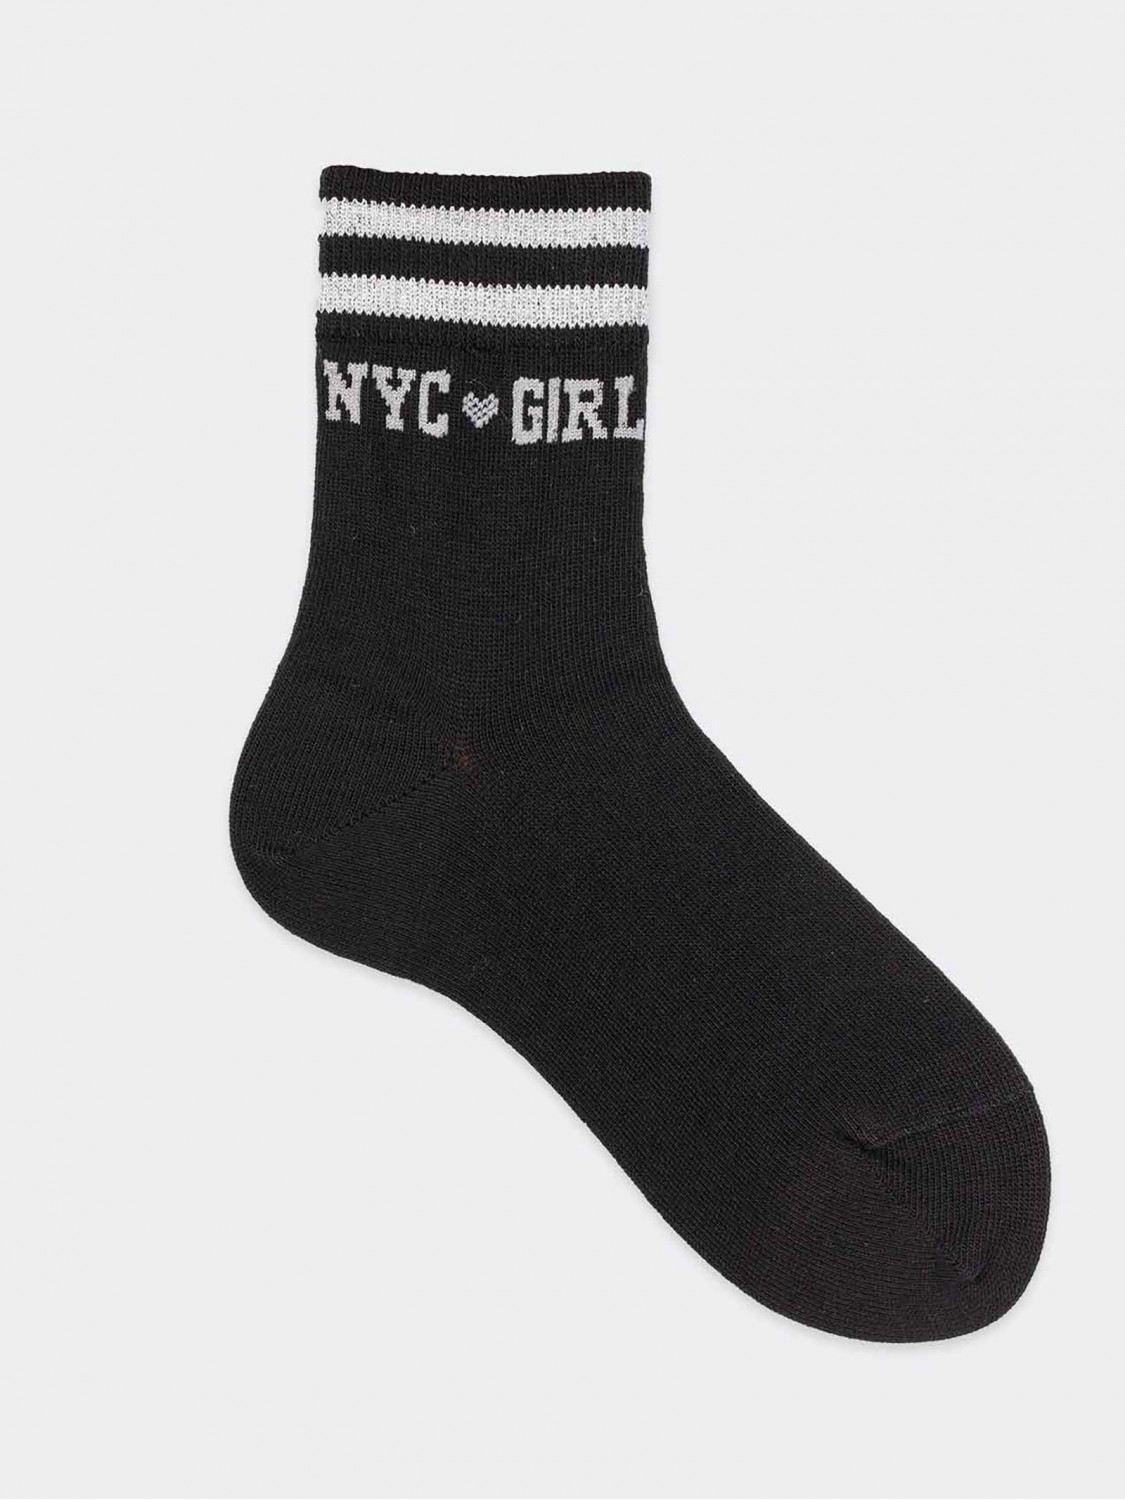 New York pattern Kids Crew socks